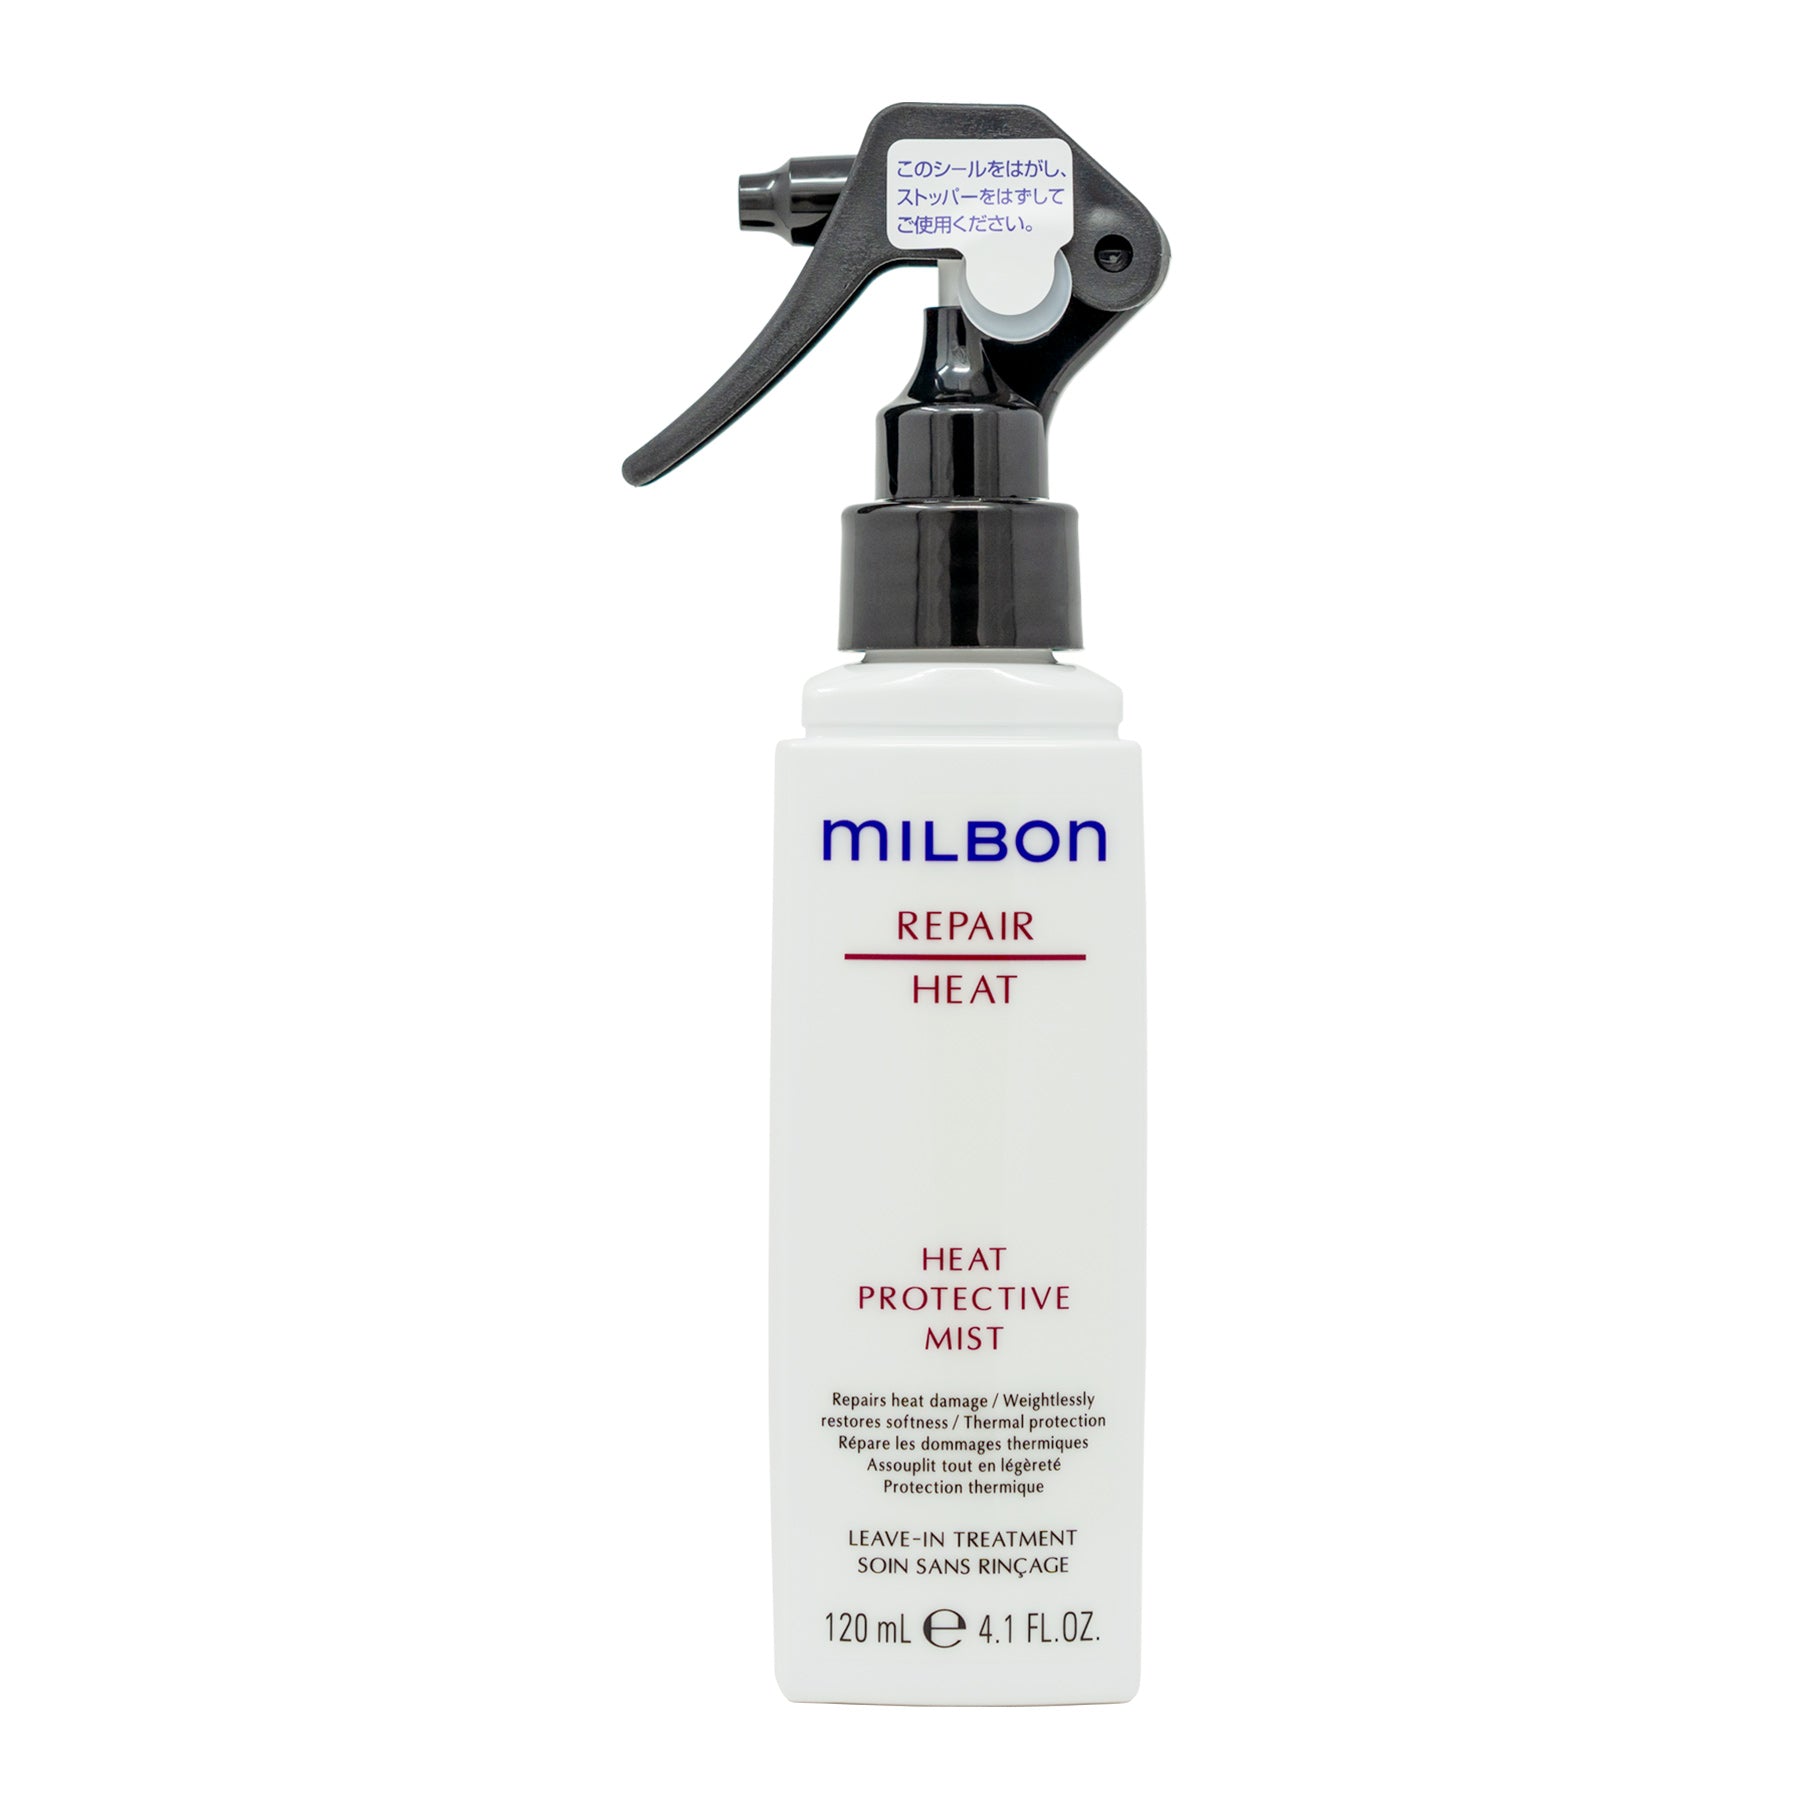 Milbon Repair Heat Protective Mist